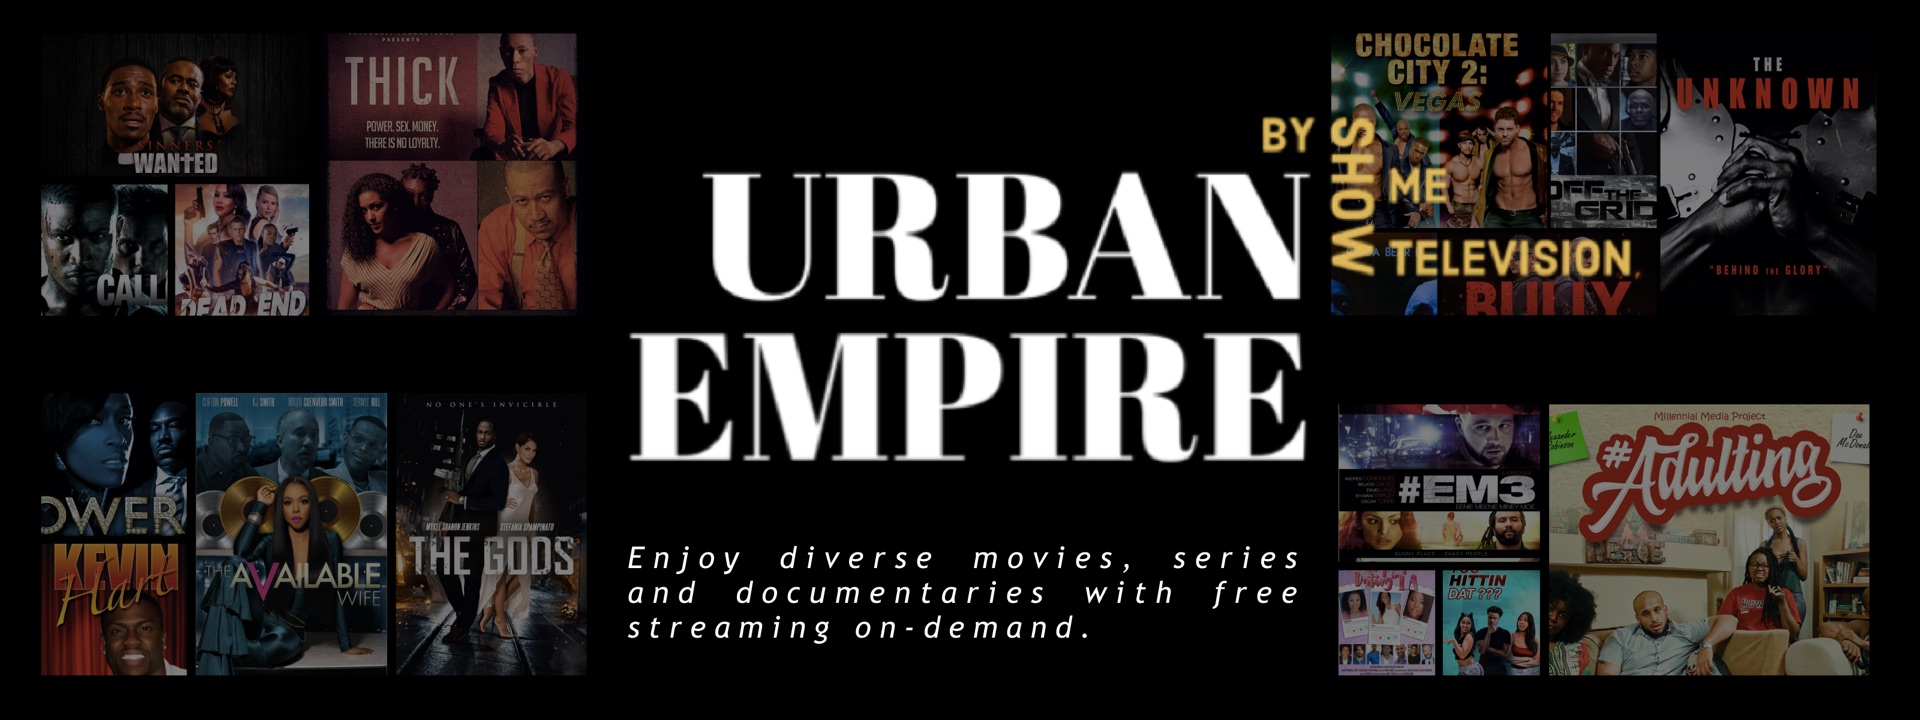 UrbanEmpire-Featured-v1-16x6